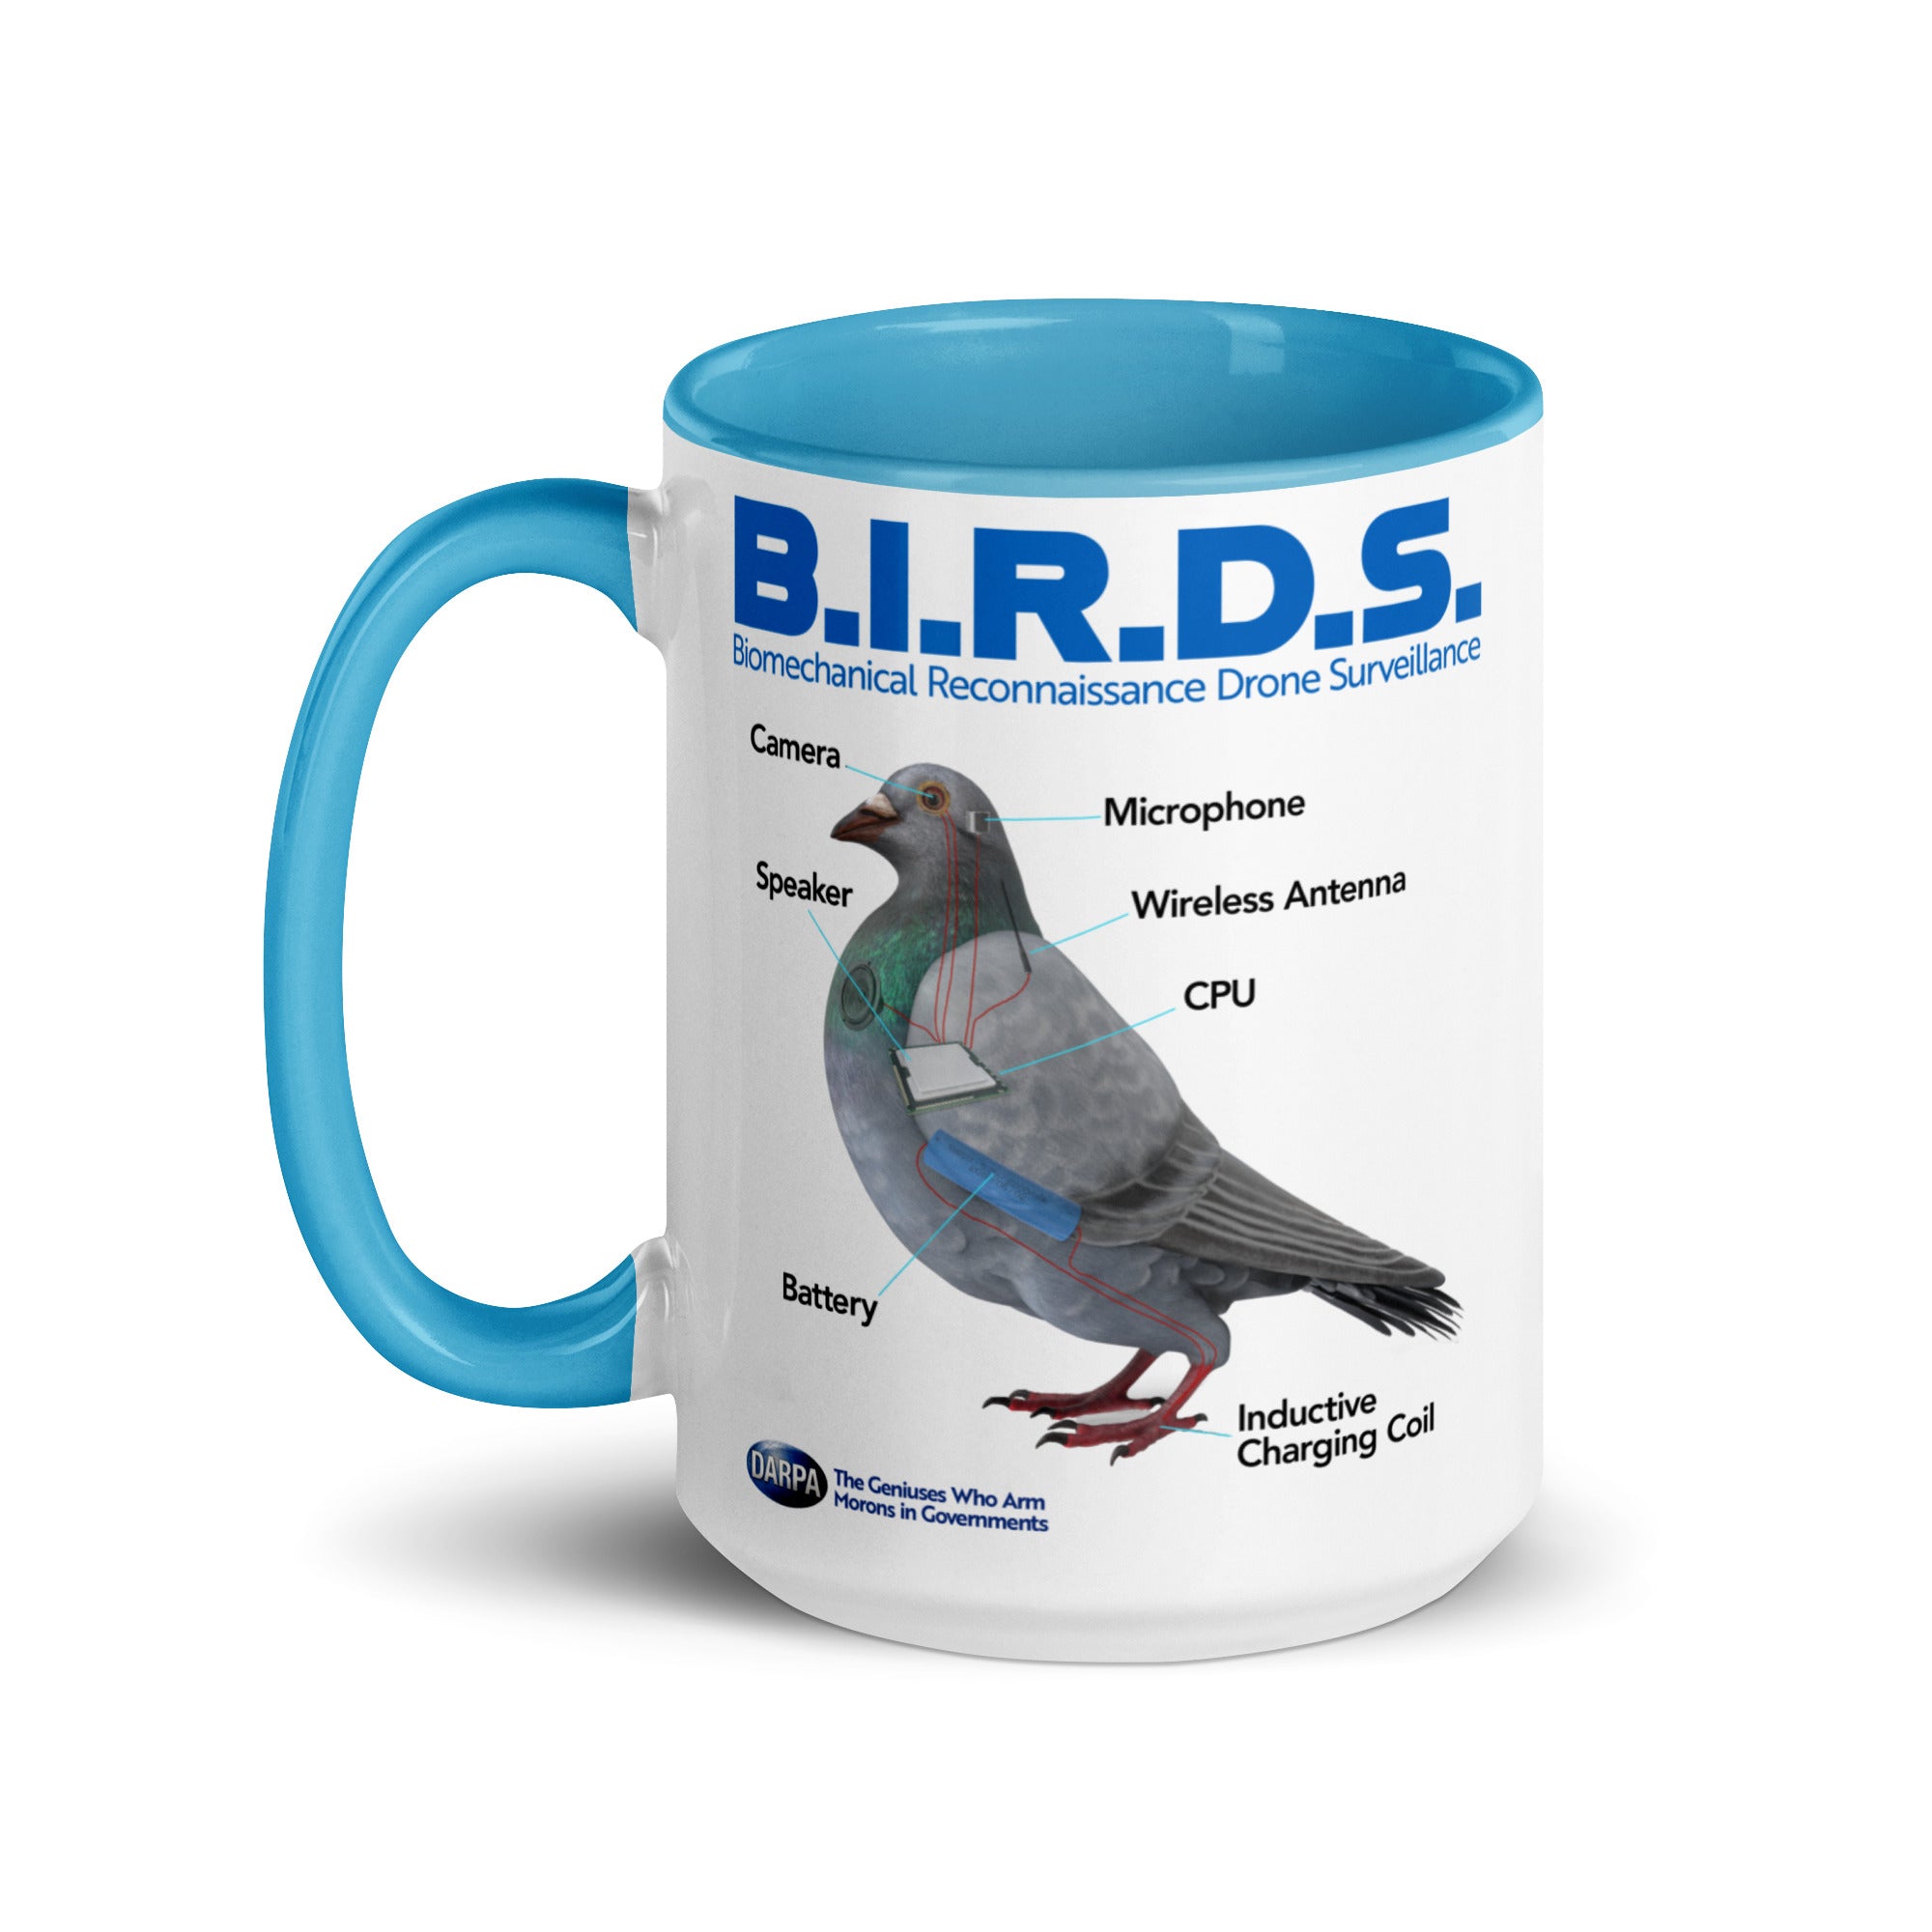 B.I.R.D.S. Biomechanical Reconnaissance Drone Surveillance Coffee Mug